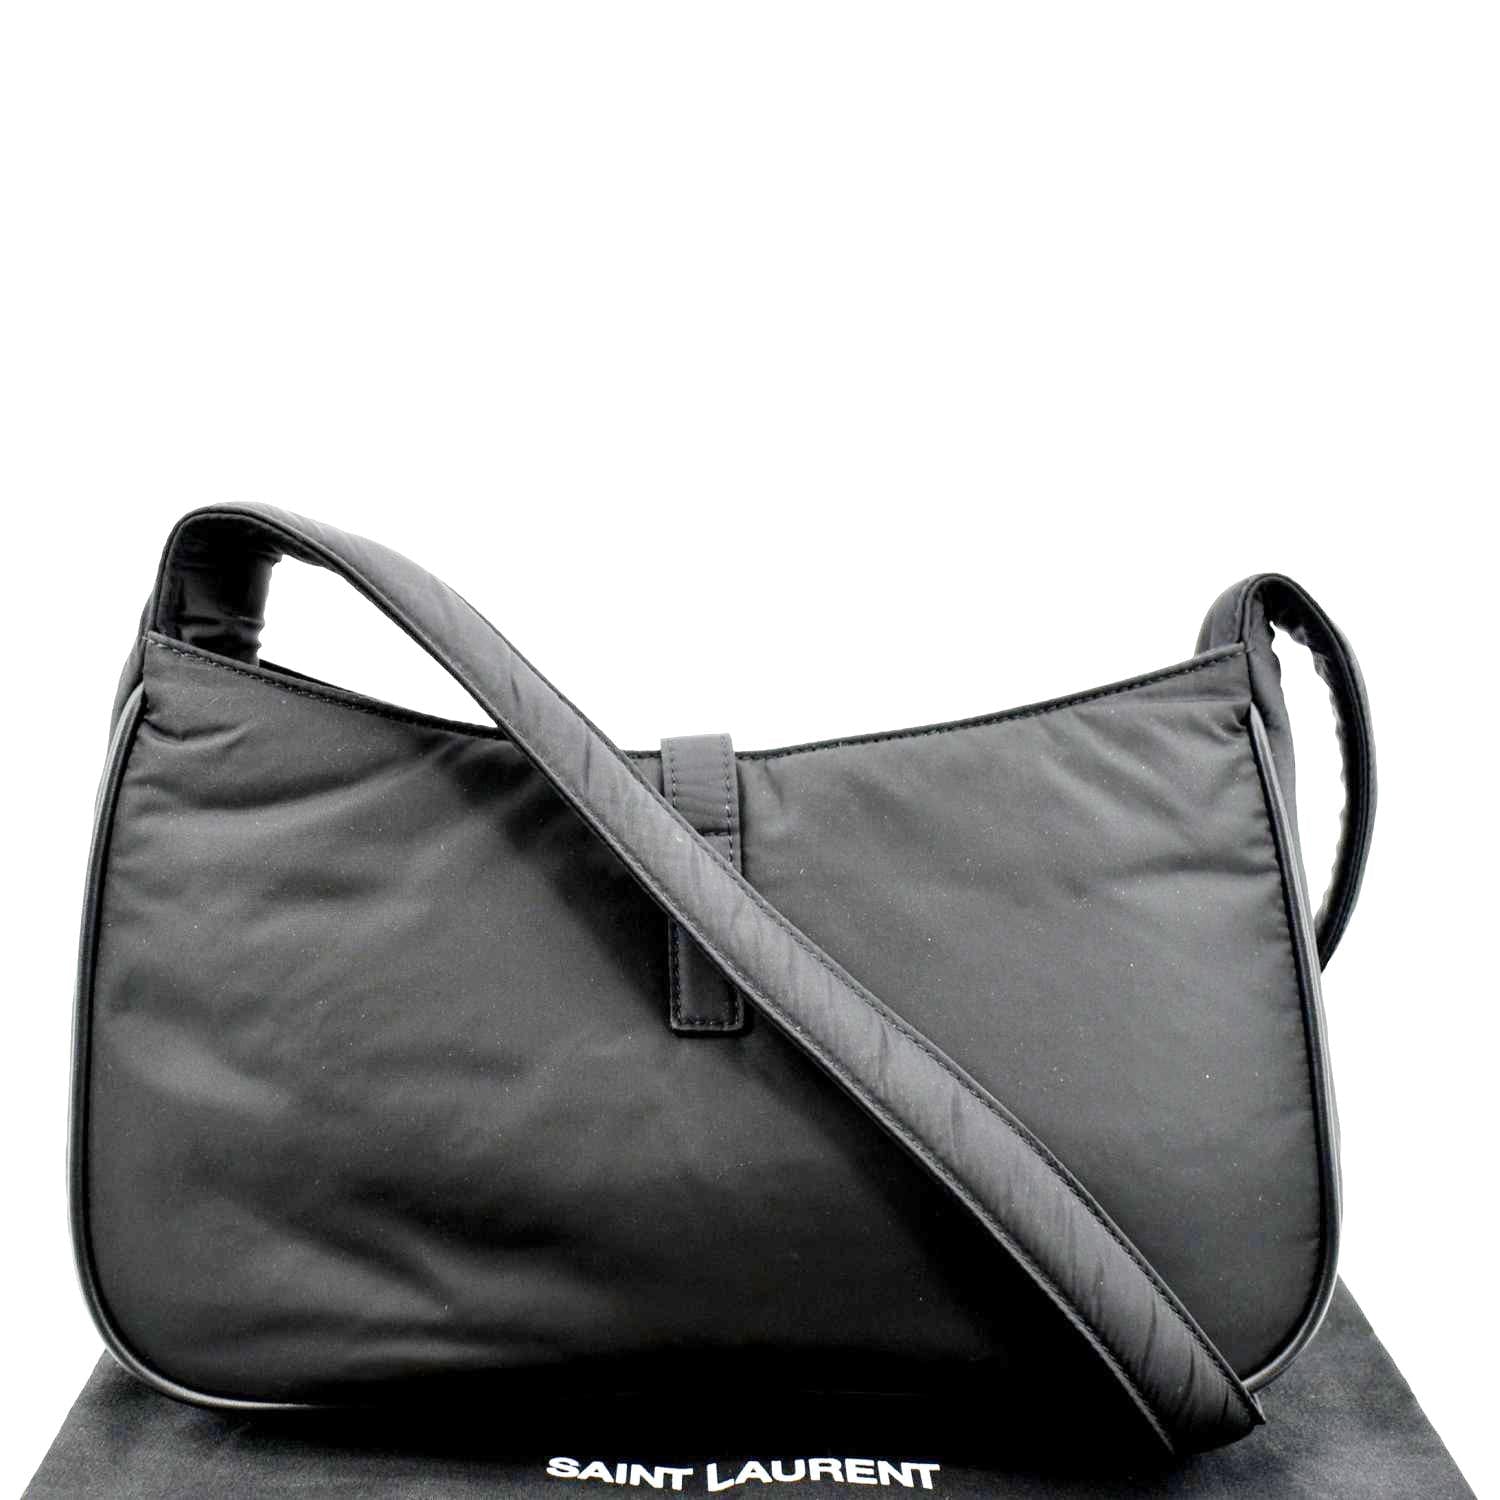 Saint Laurent 5 A 7 Ysl Nylon Shoulder Bag